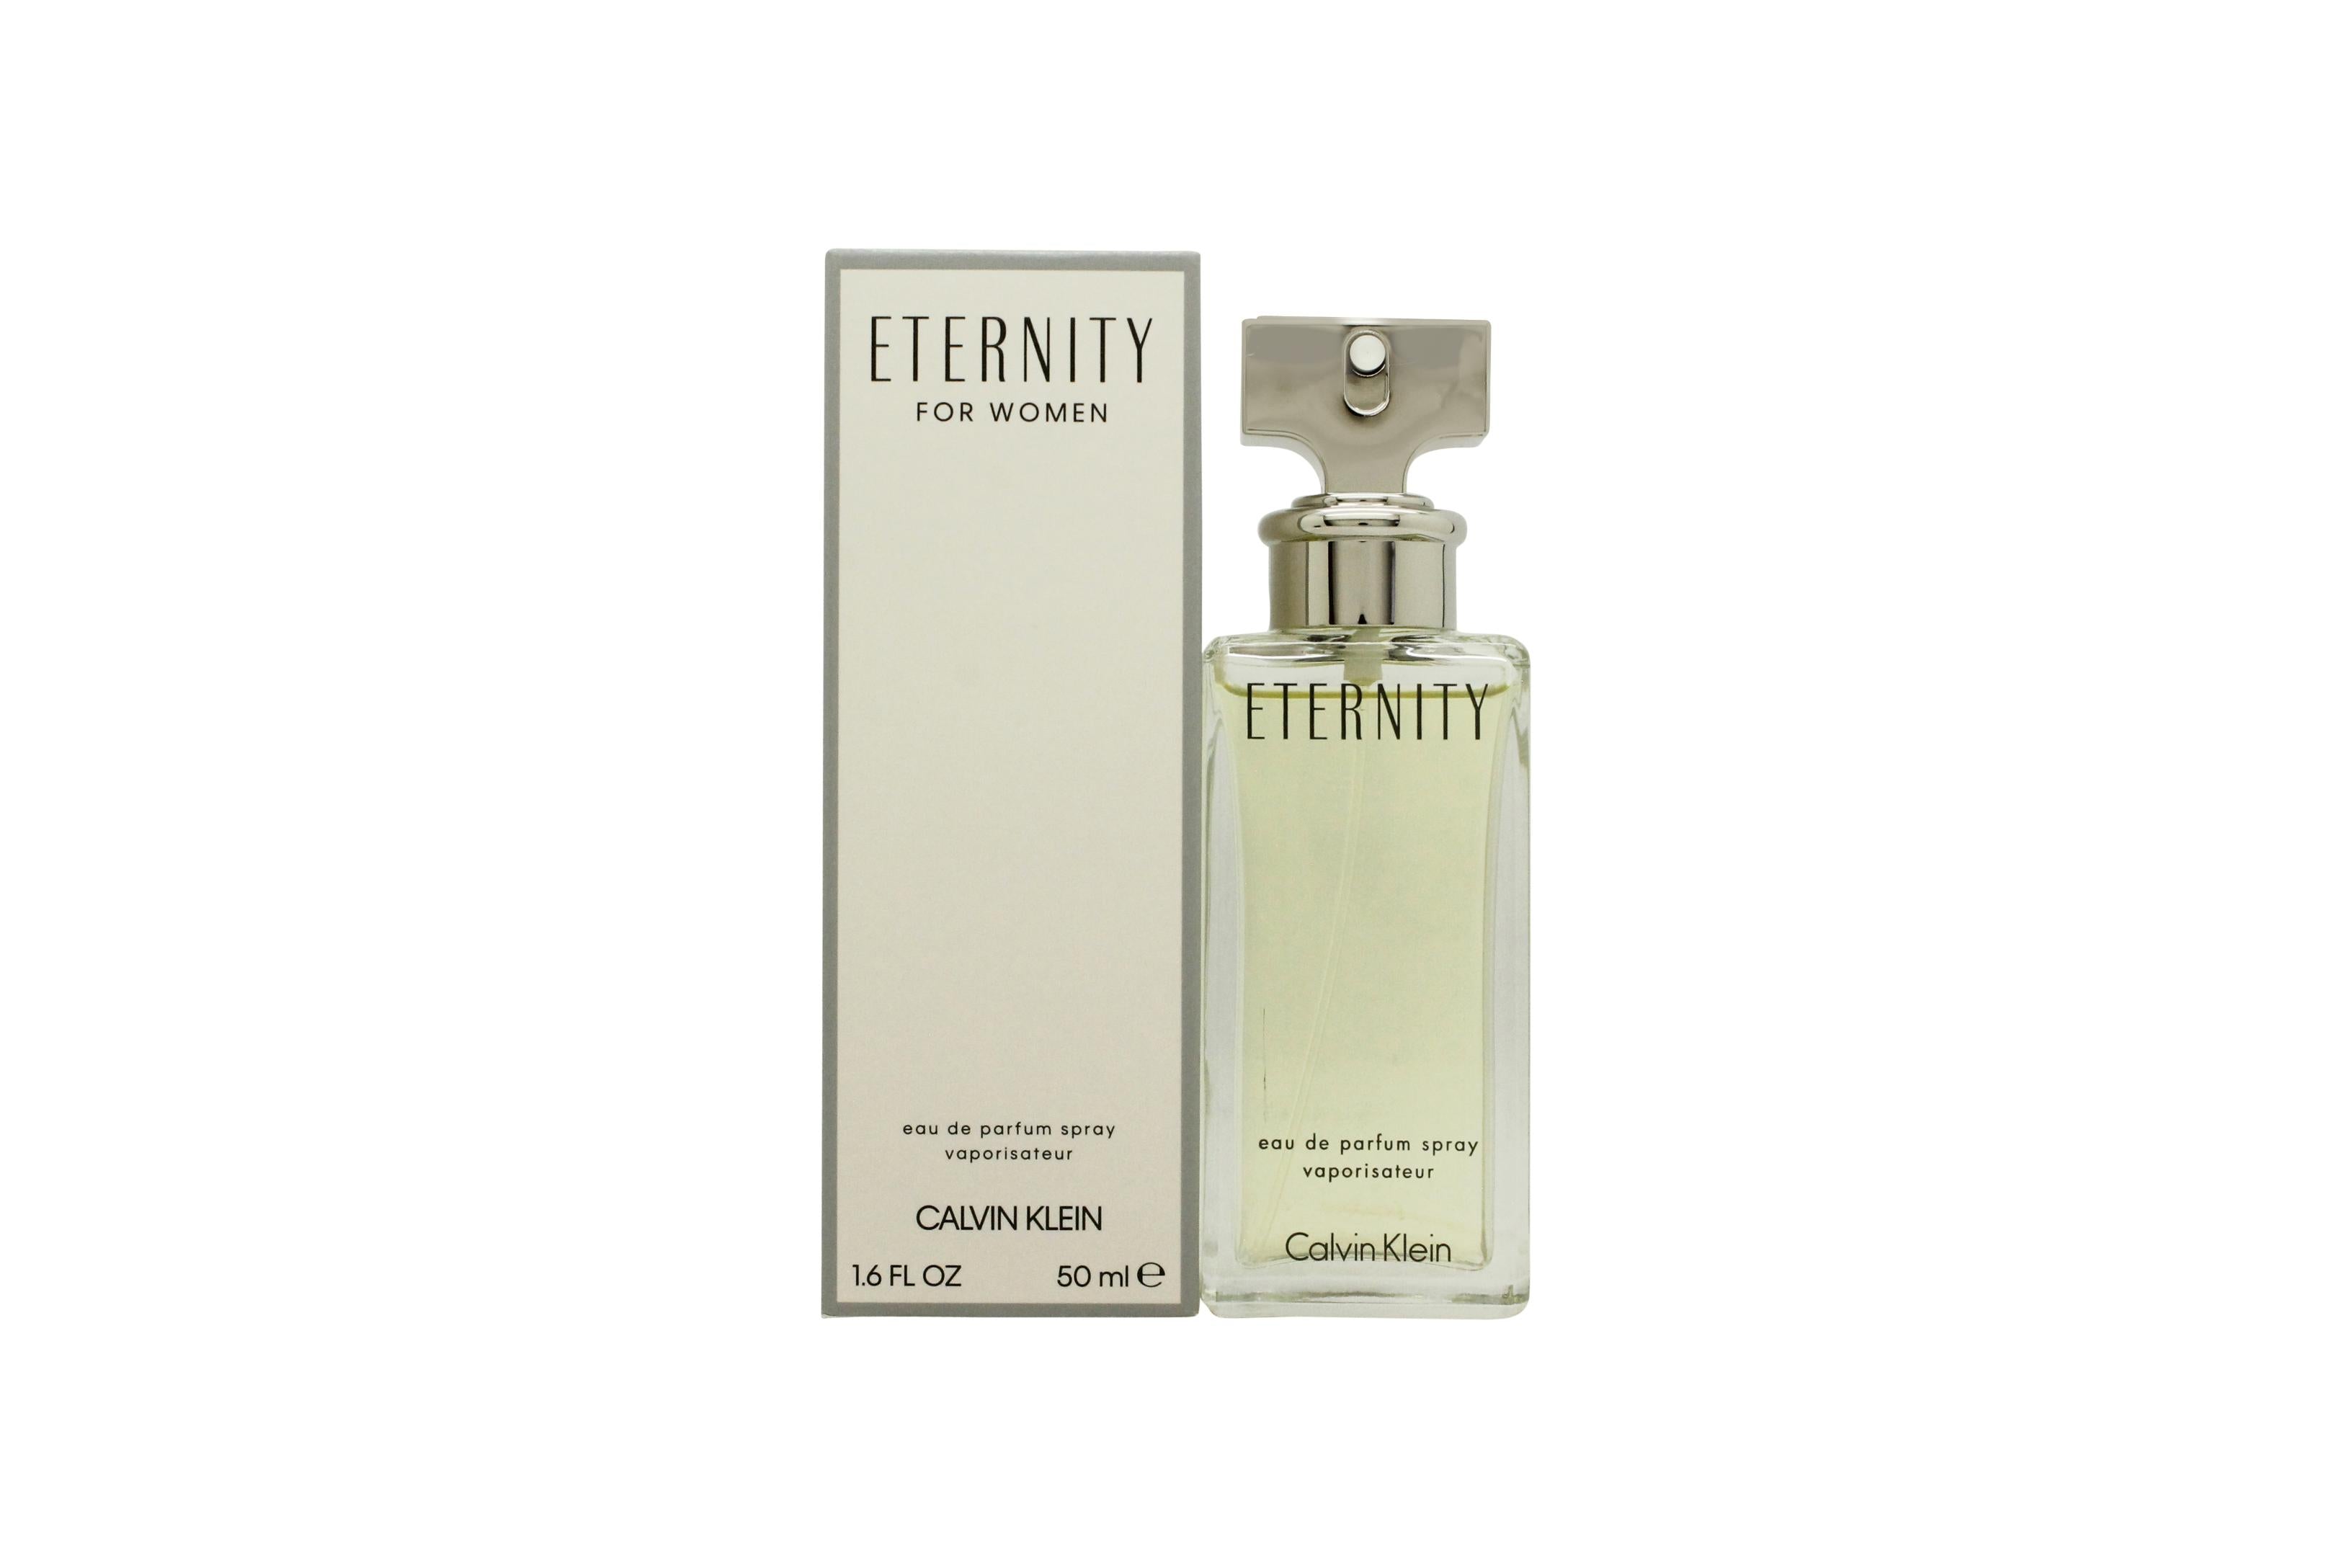 View Calvin Klein Eternity Eau de Parfum 50ml Spray information